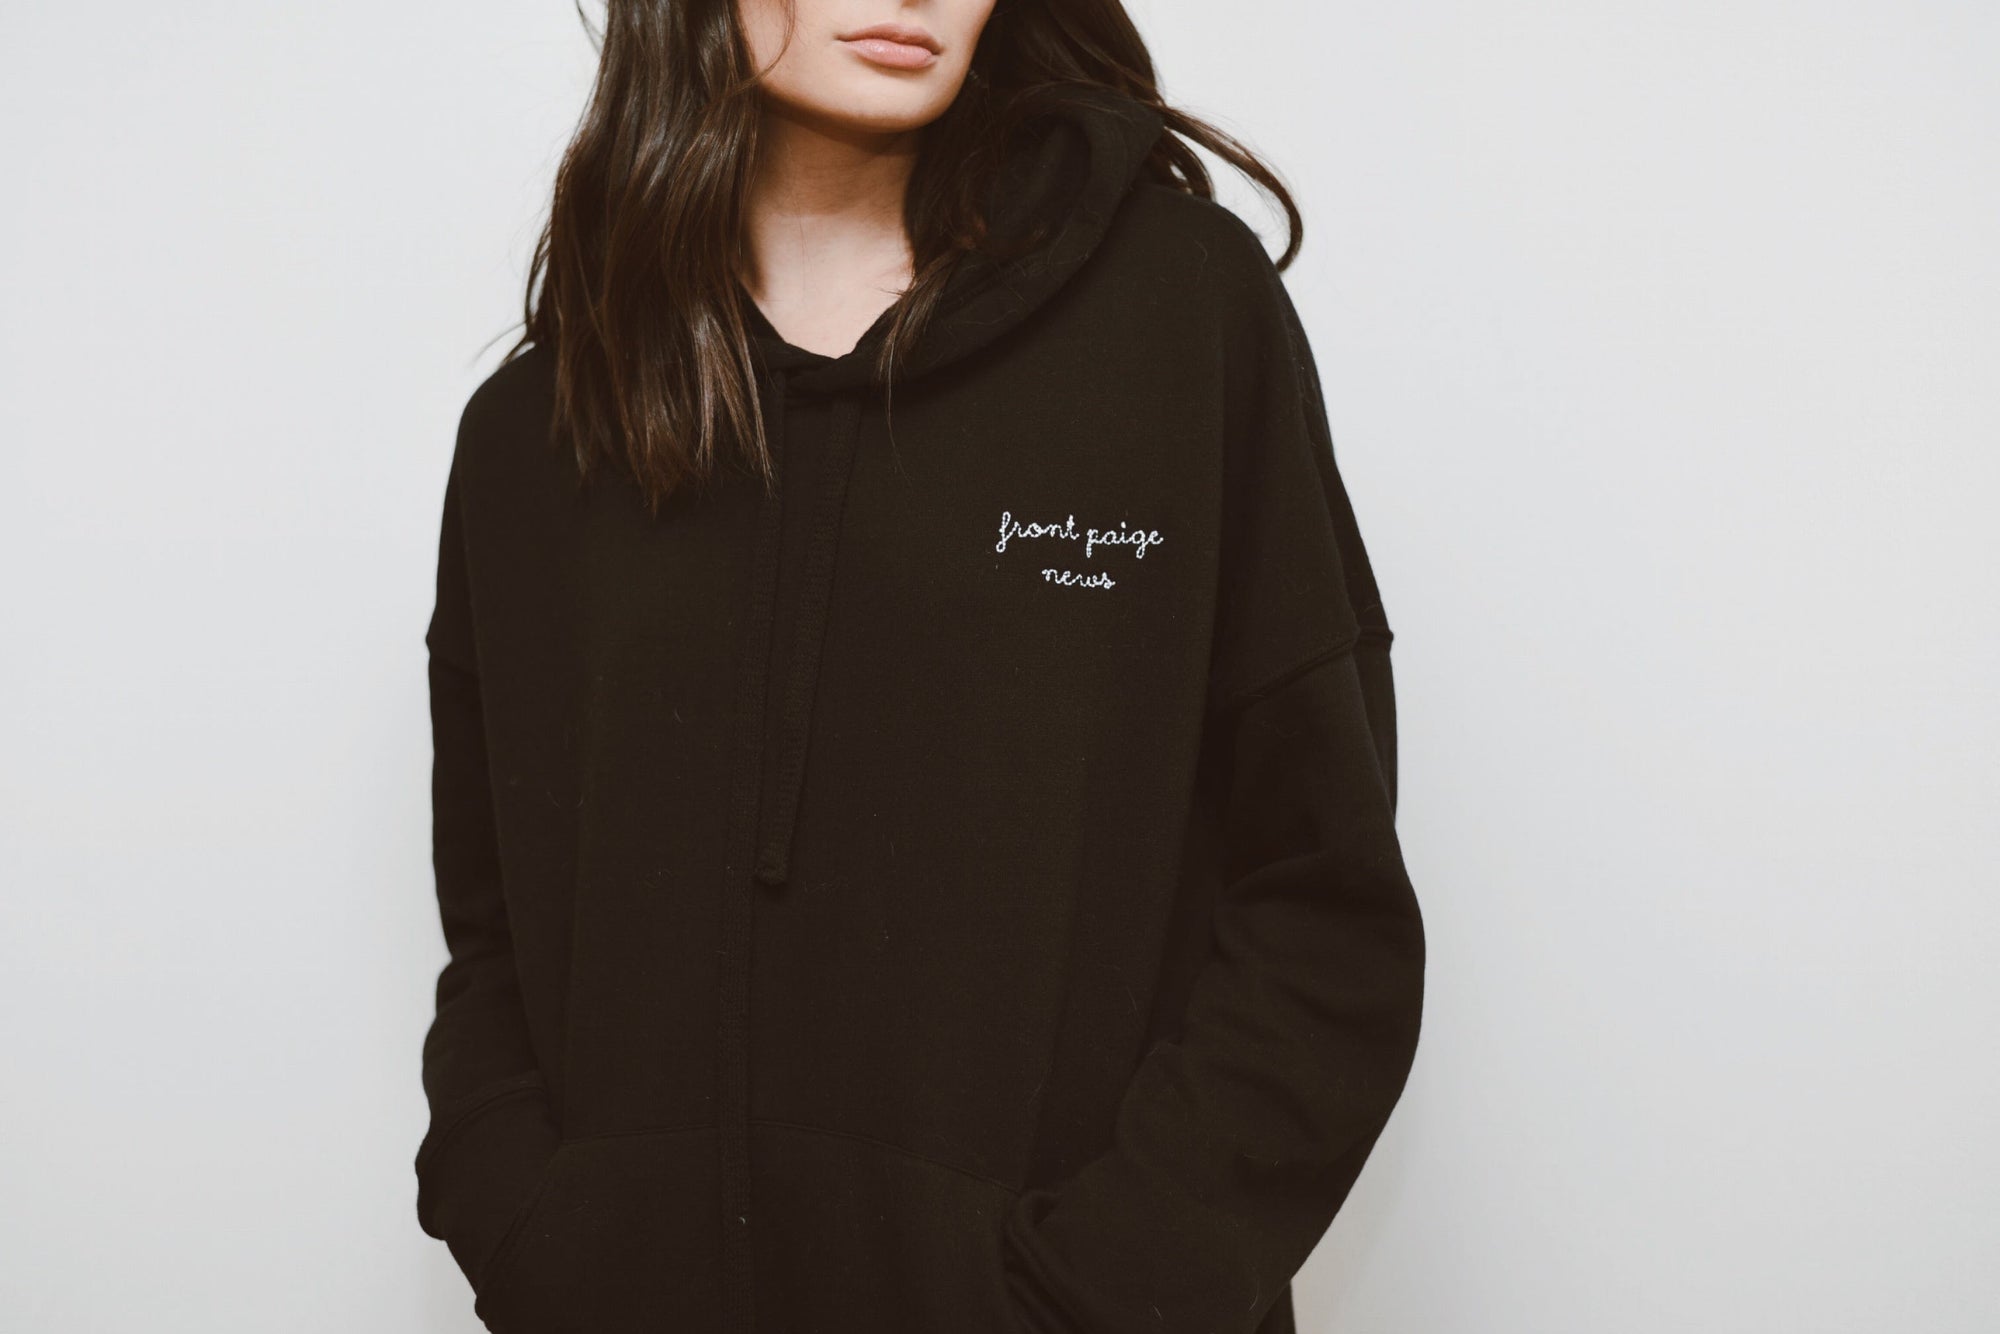 juju + stitch Personalized Custom Embroidered Sweatshirts & Hoodies ADULT XS / Black juju x Front Paige News Hoodie